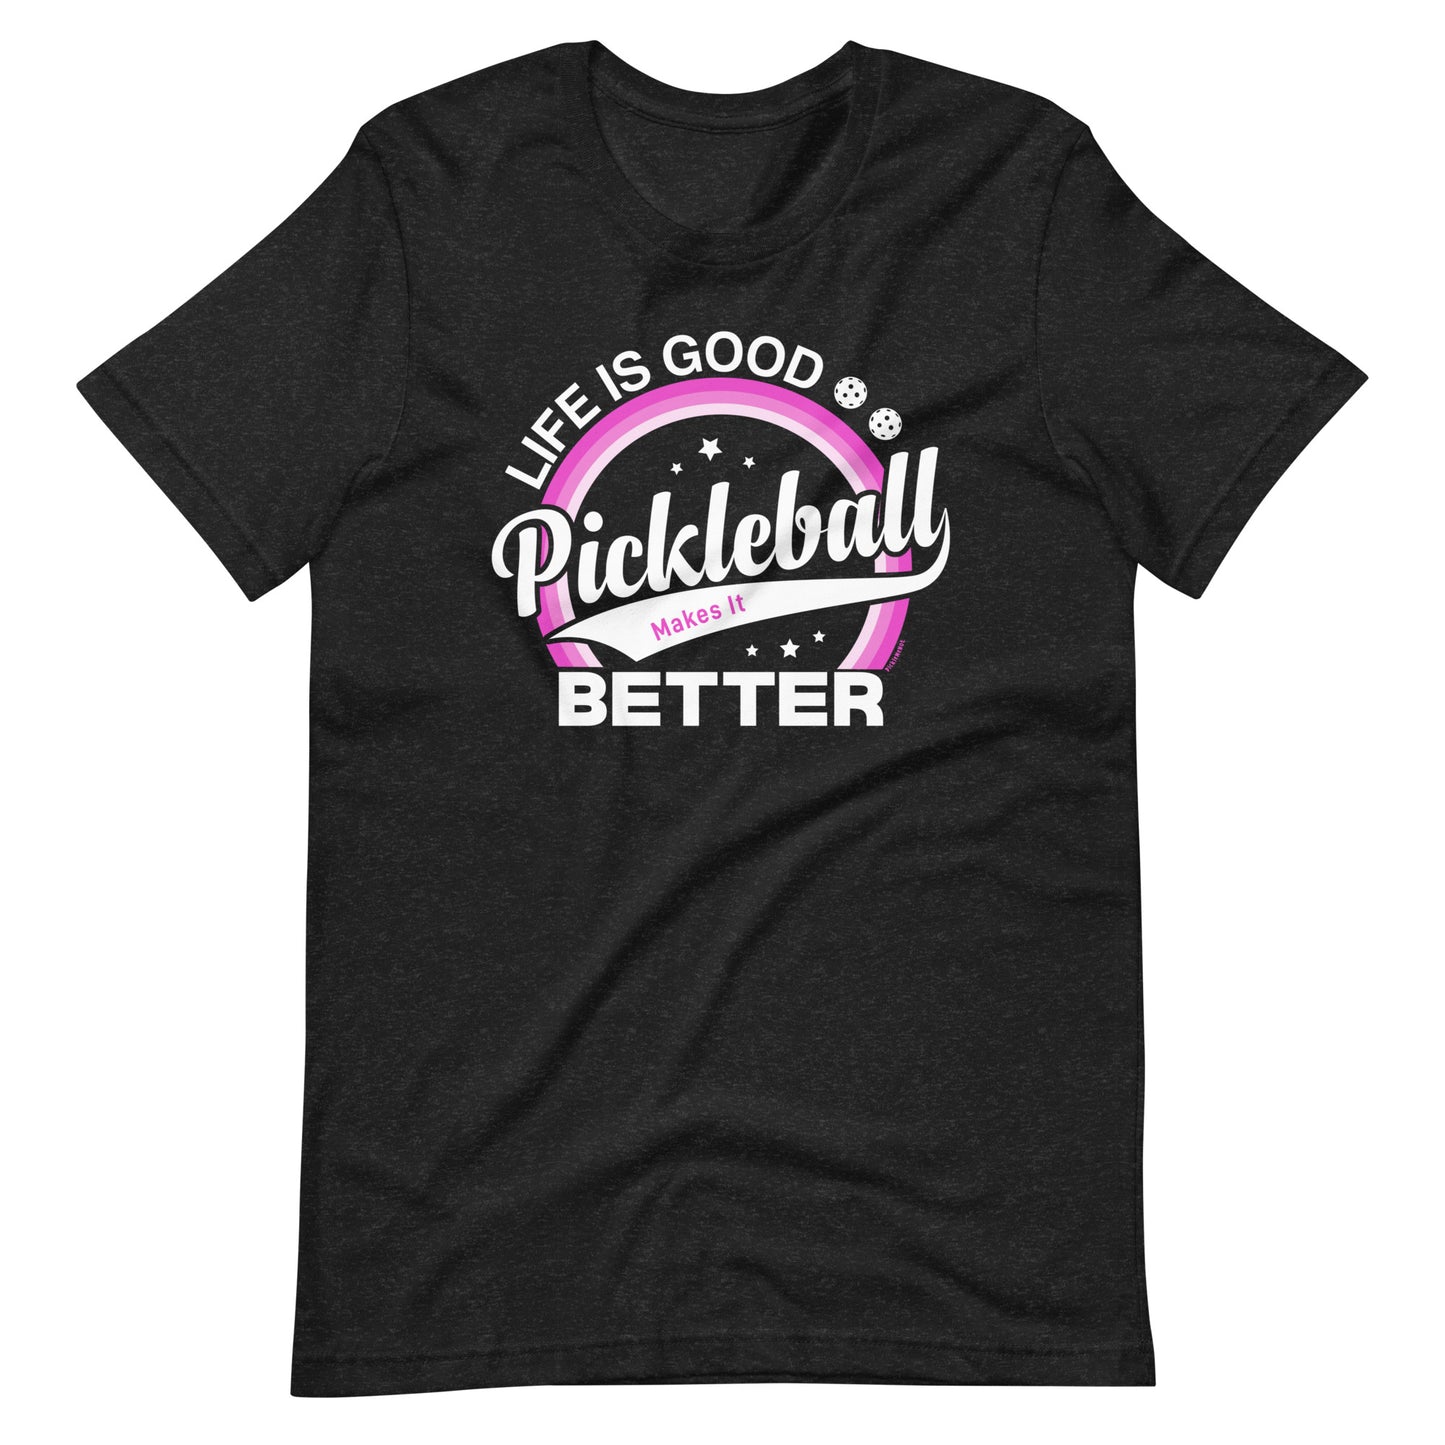 Fun Pickleball Graphic: "Life Is Good, Pickleball Makes It Better, Womens Unisex Black Heather T-Shirt